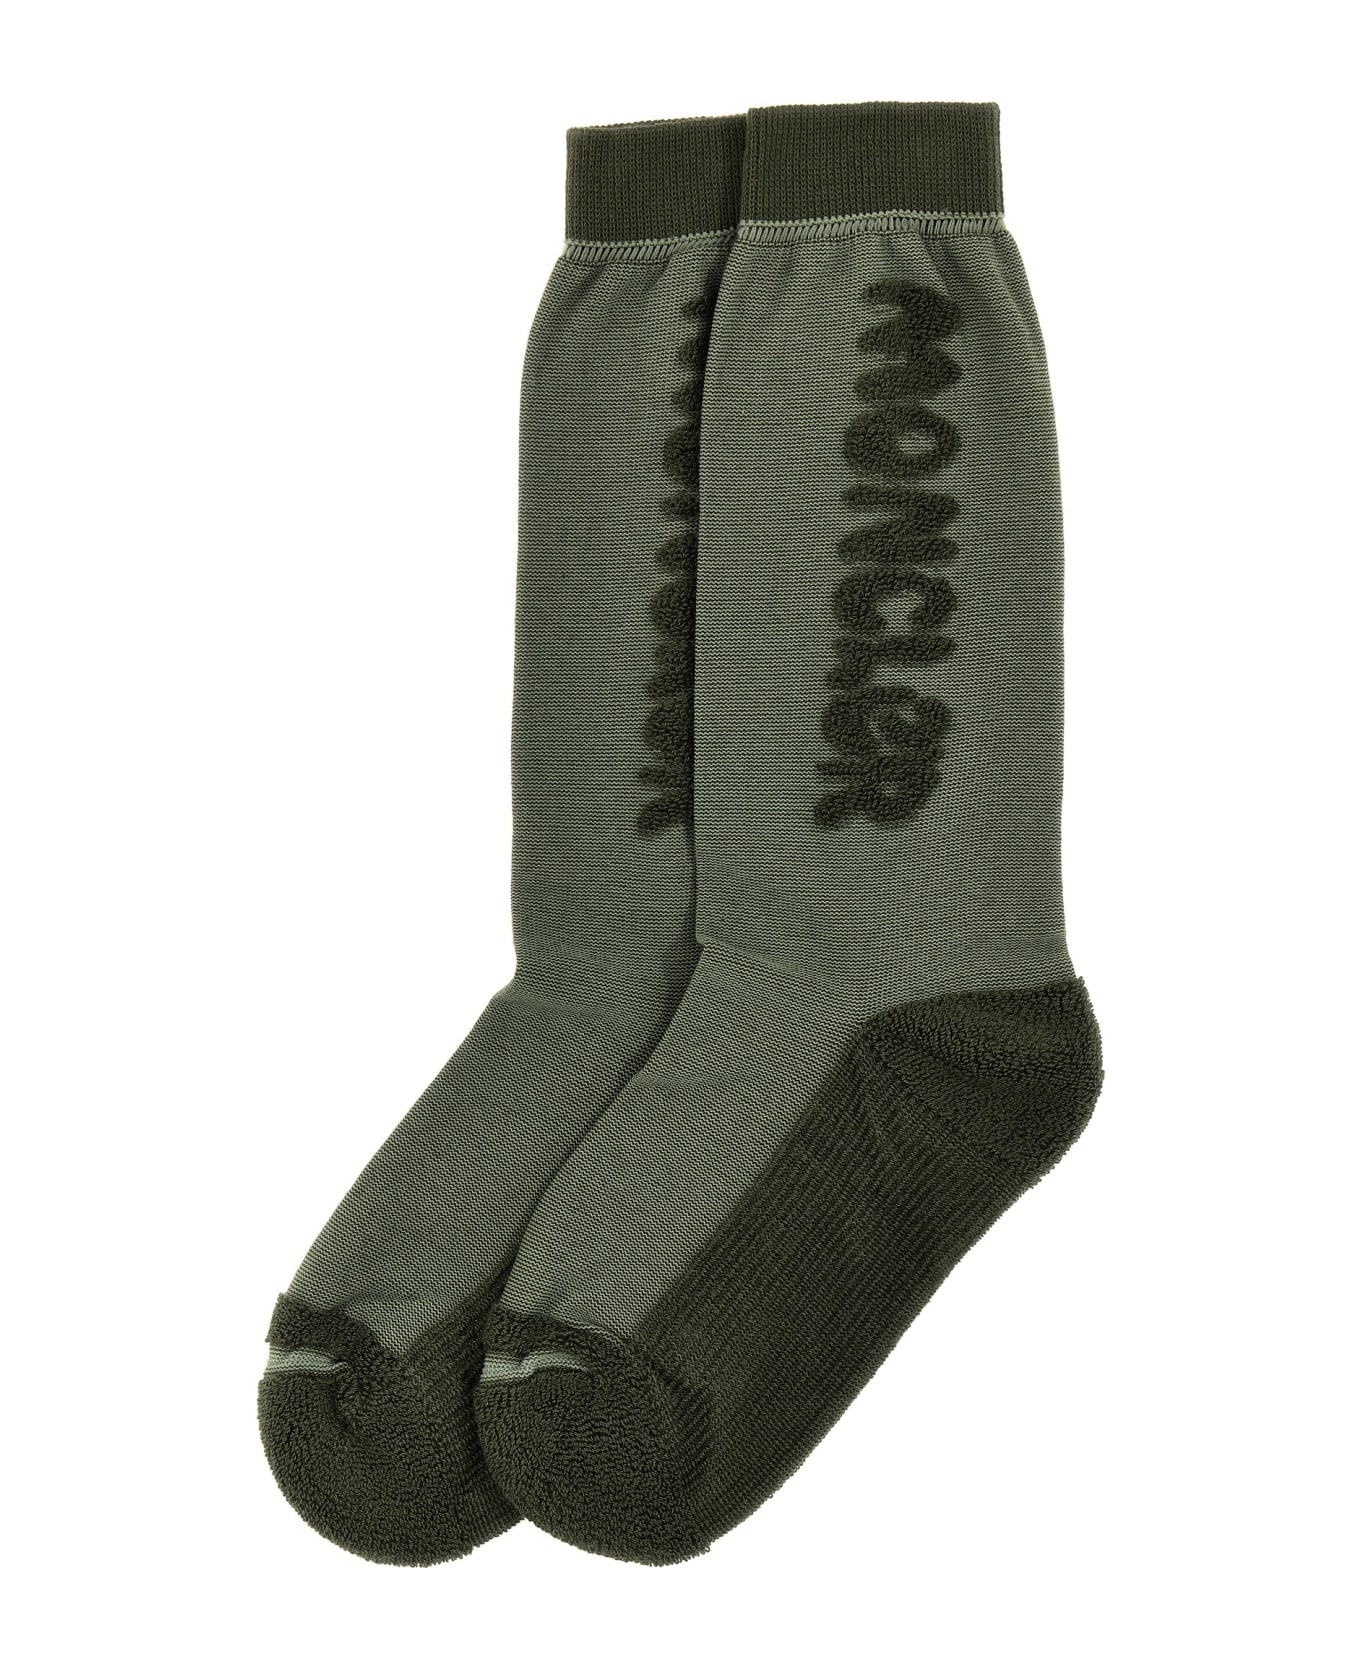 Moncler Genius X Salehe Bembury Socks - Green